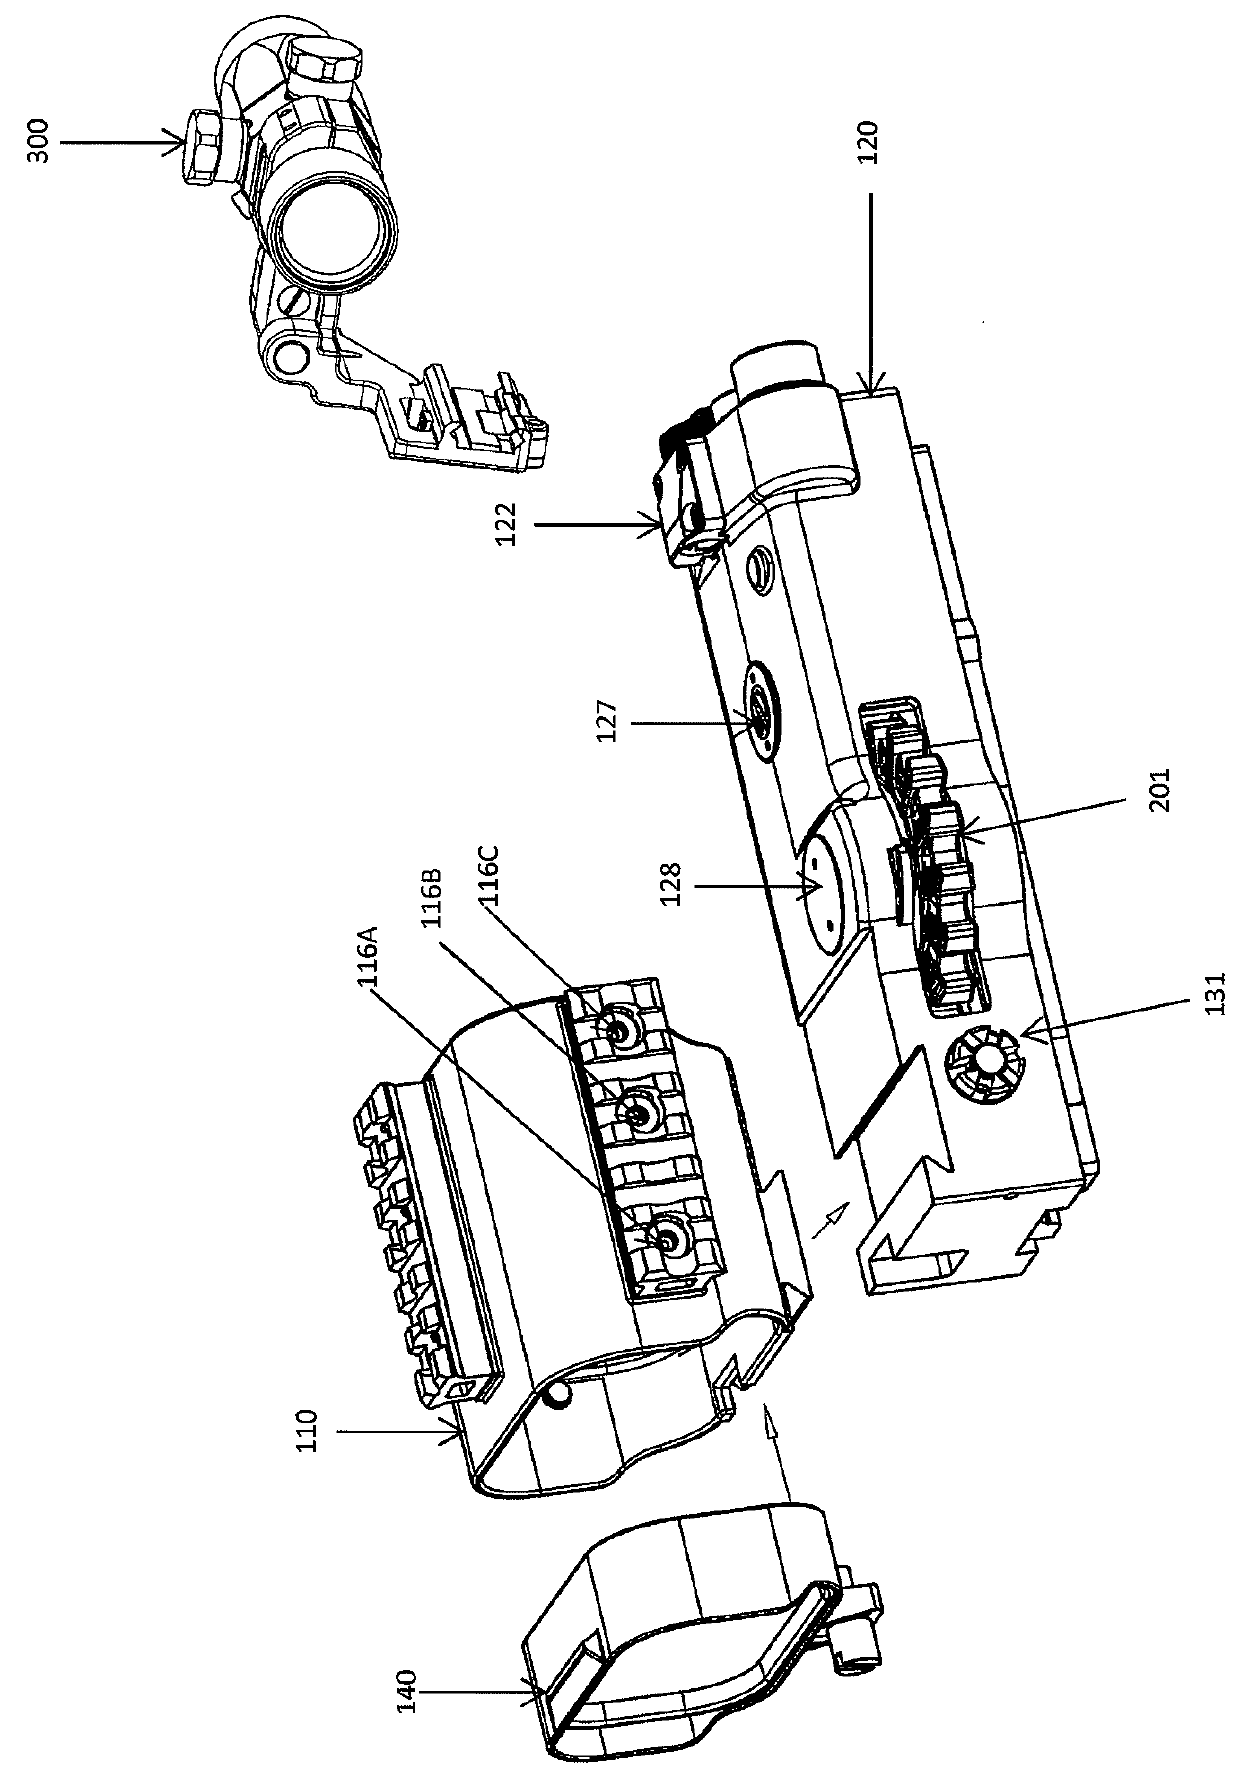 Modular universal machinegun sight with bullet drop compensation device